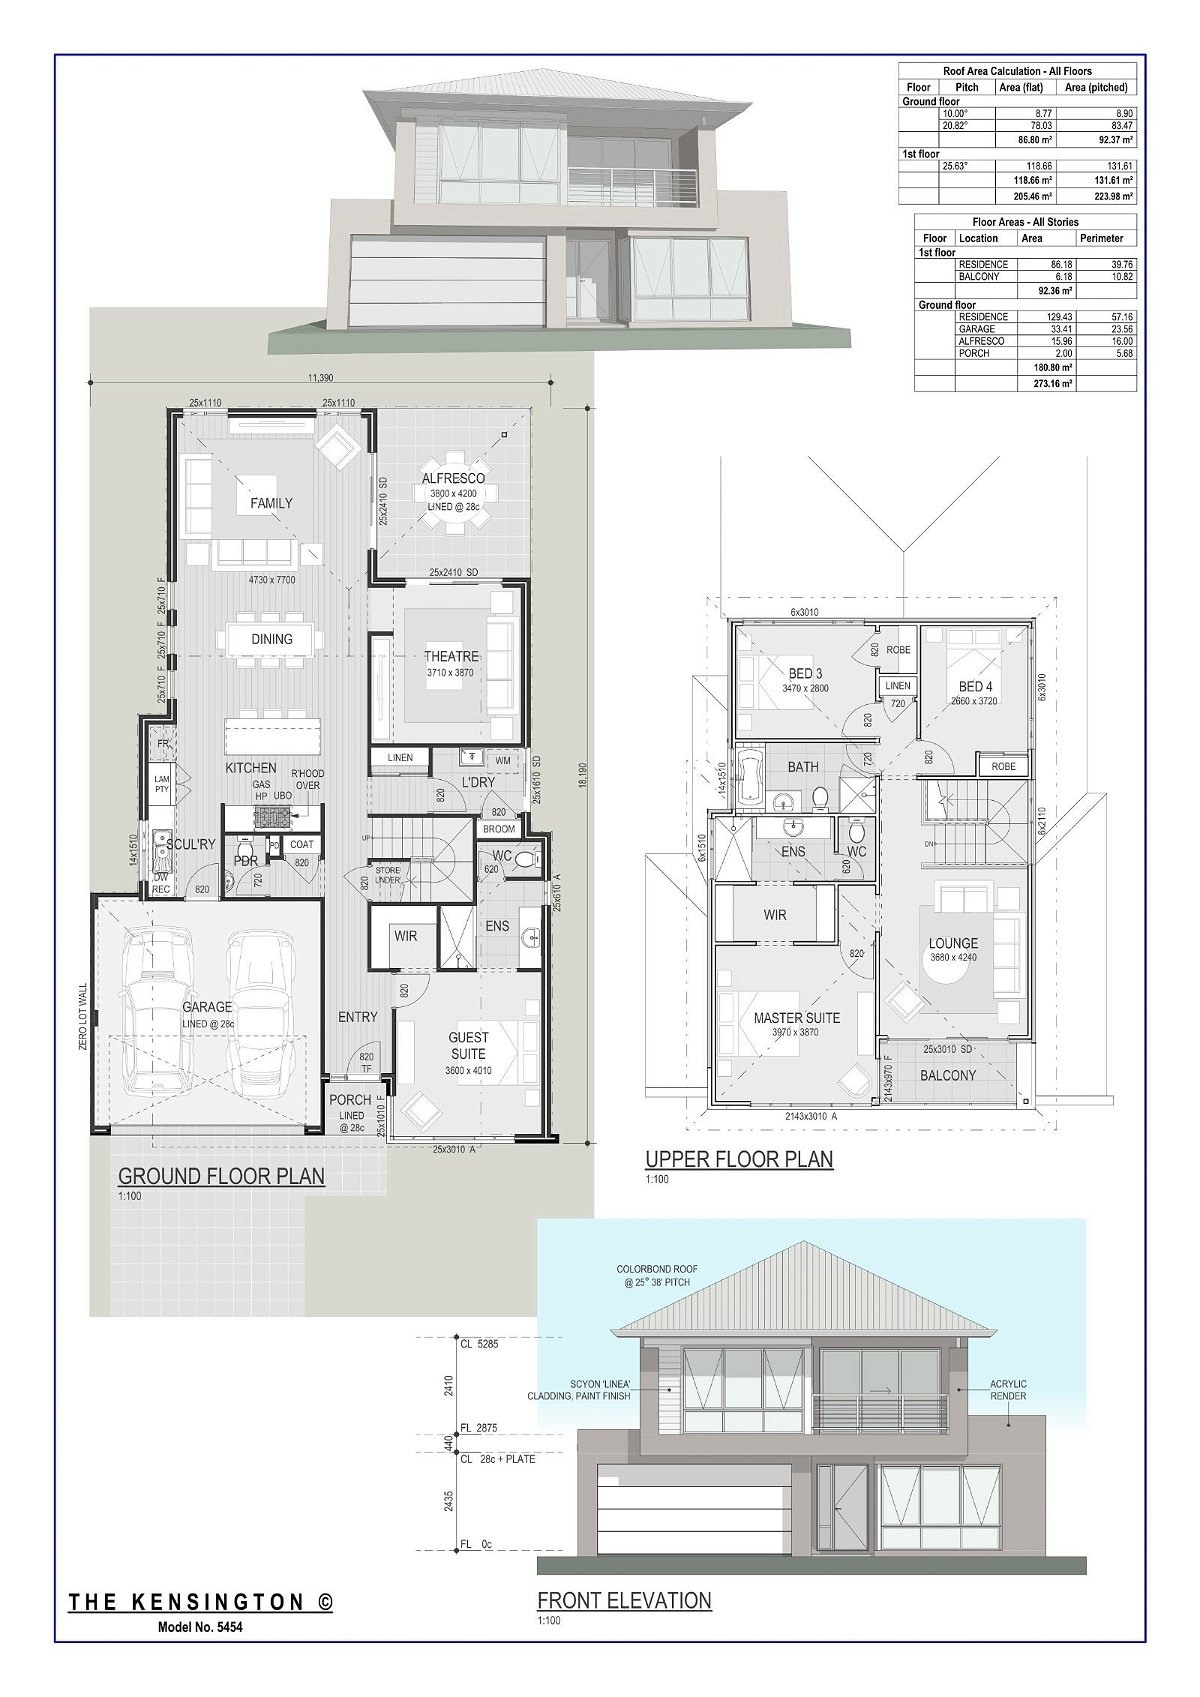 Residential Attitudes - Lot 32 Lausanne Way, Canning Vale, Wa 6155 - Floorplan - The Kensington 1 Copy